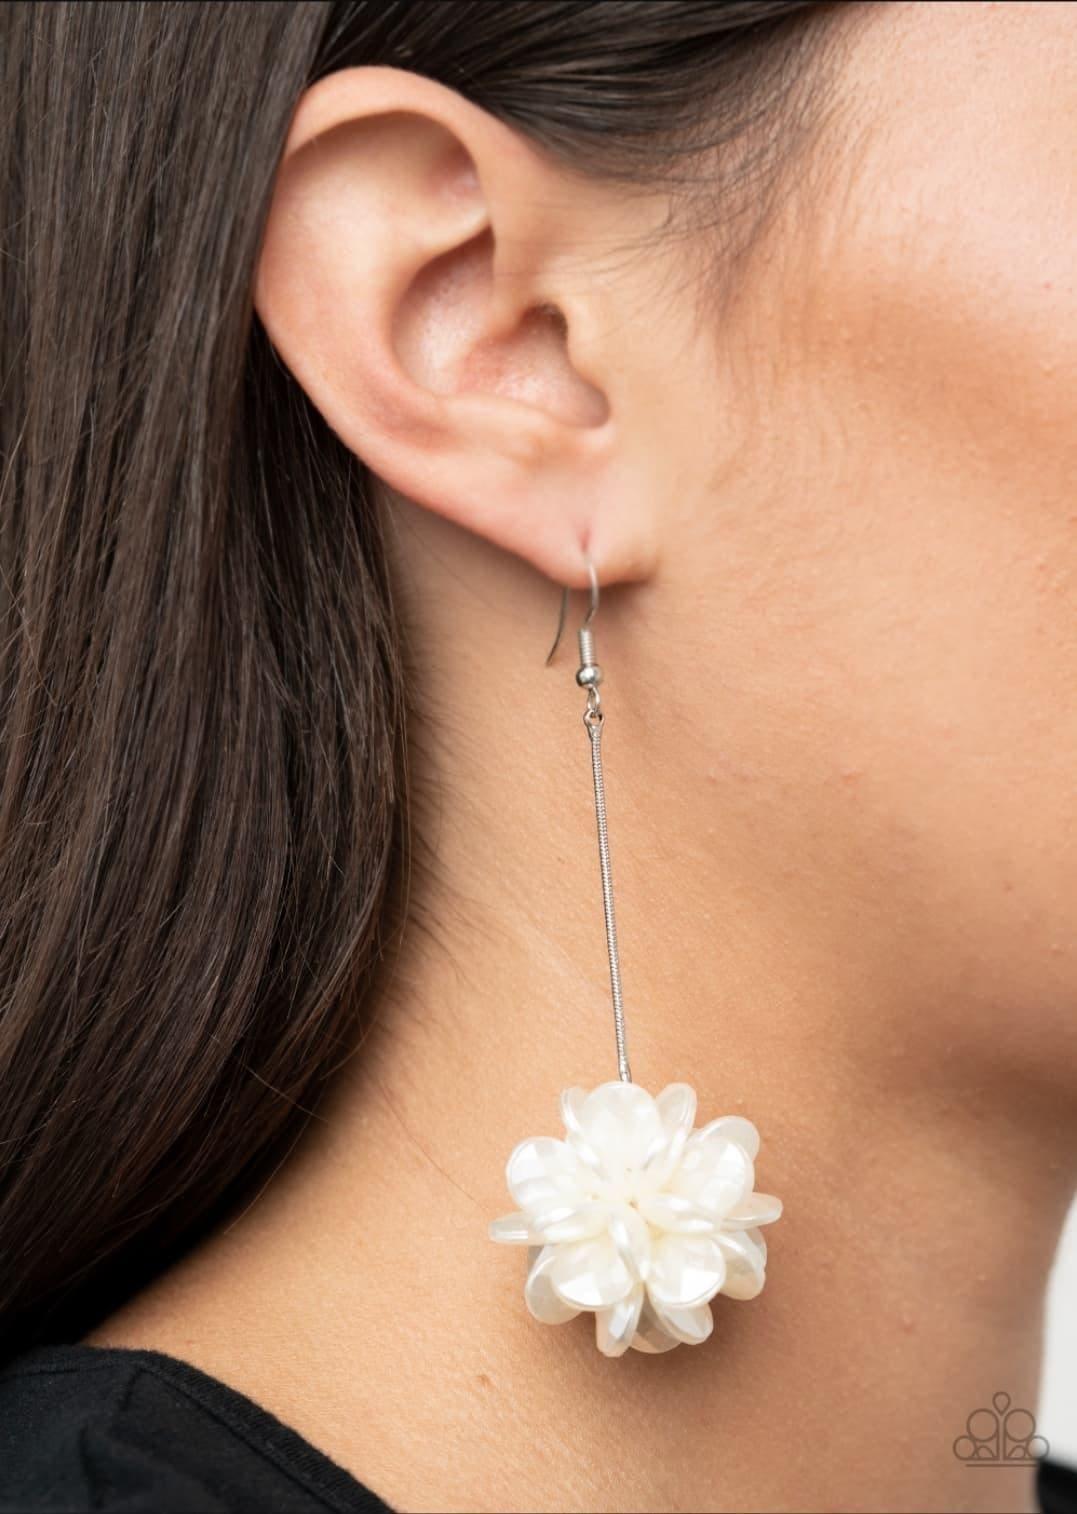 Paparazzi Accessories - Swing Big - White Earring - Bling by JessieK